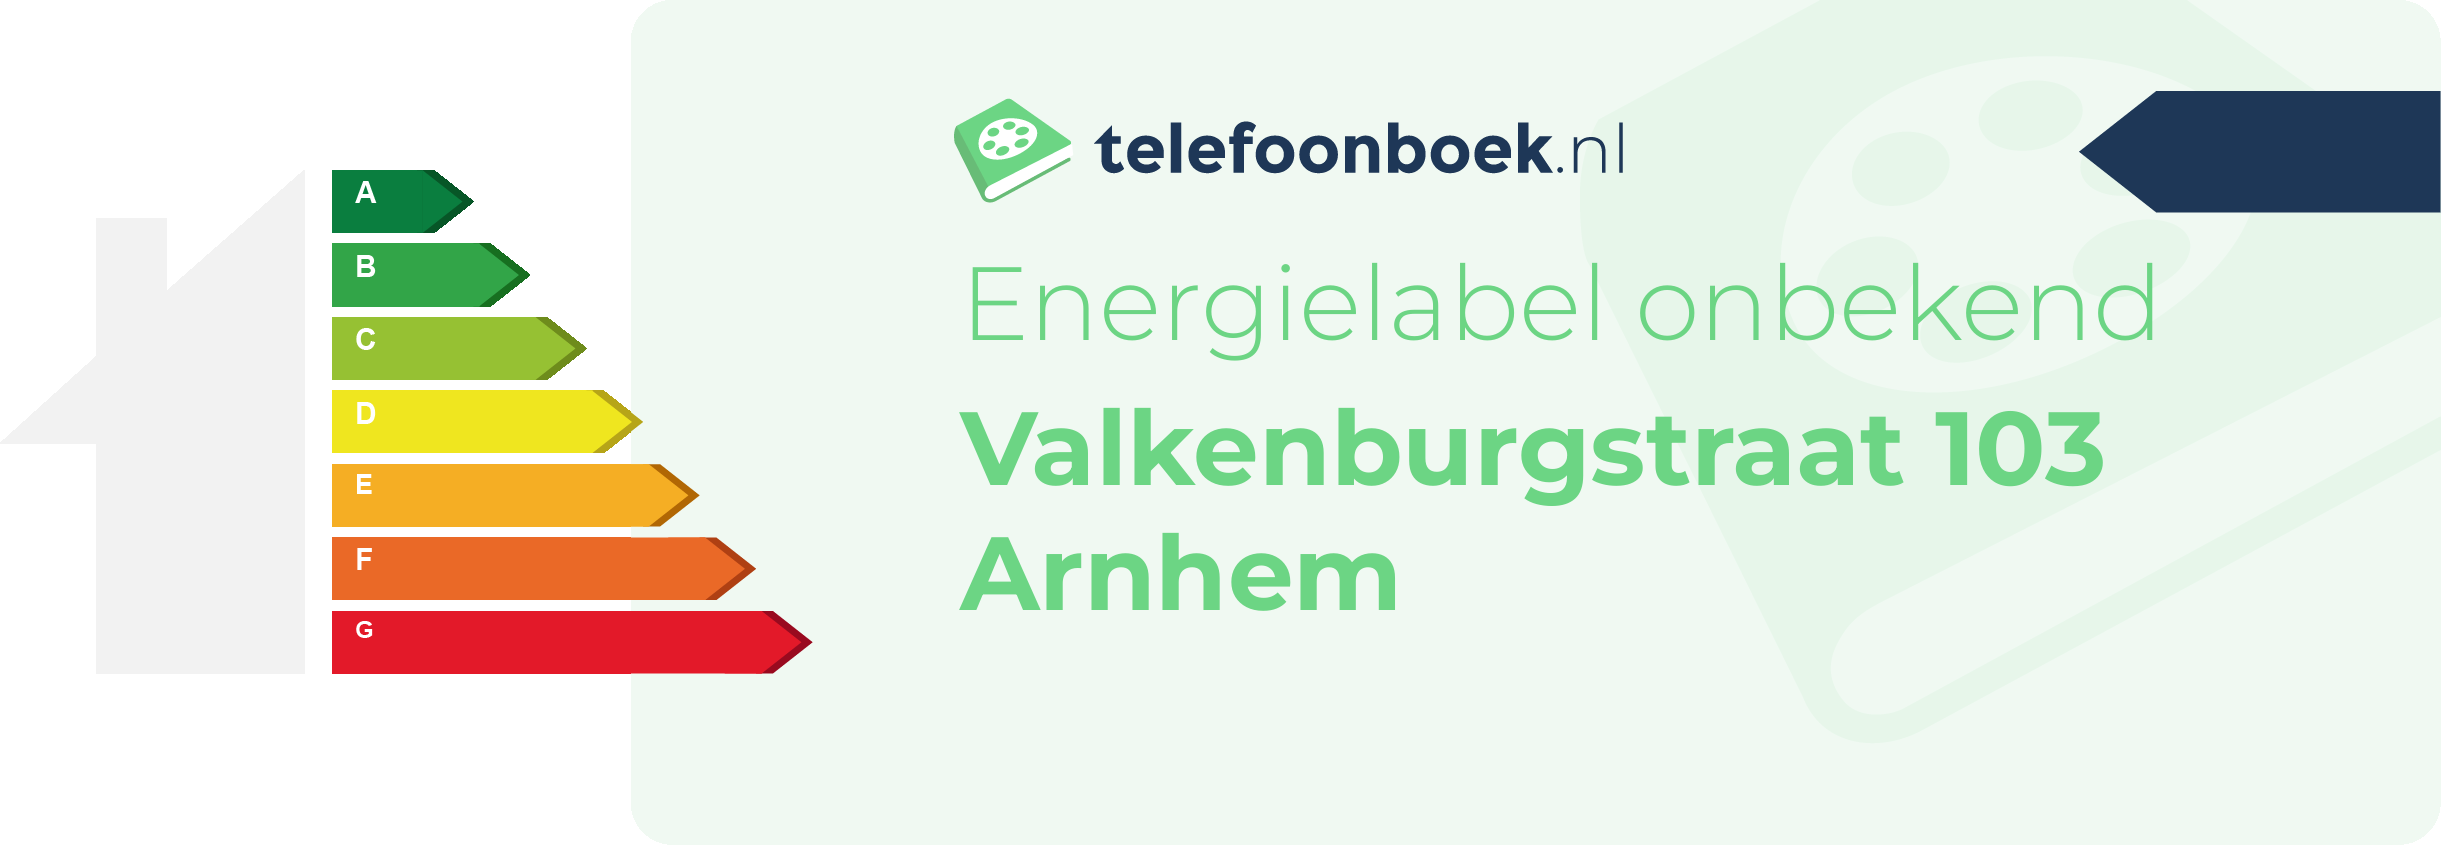 Energielabel Valkenburgstraat 103 Arnhem